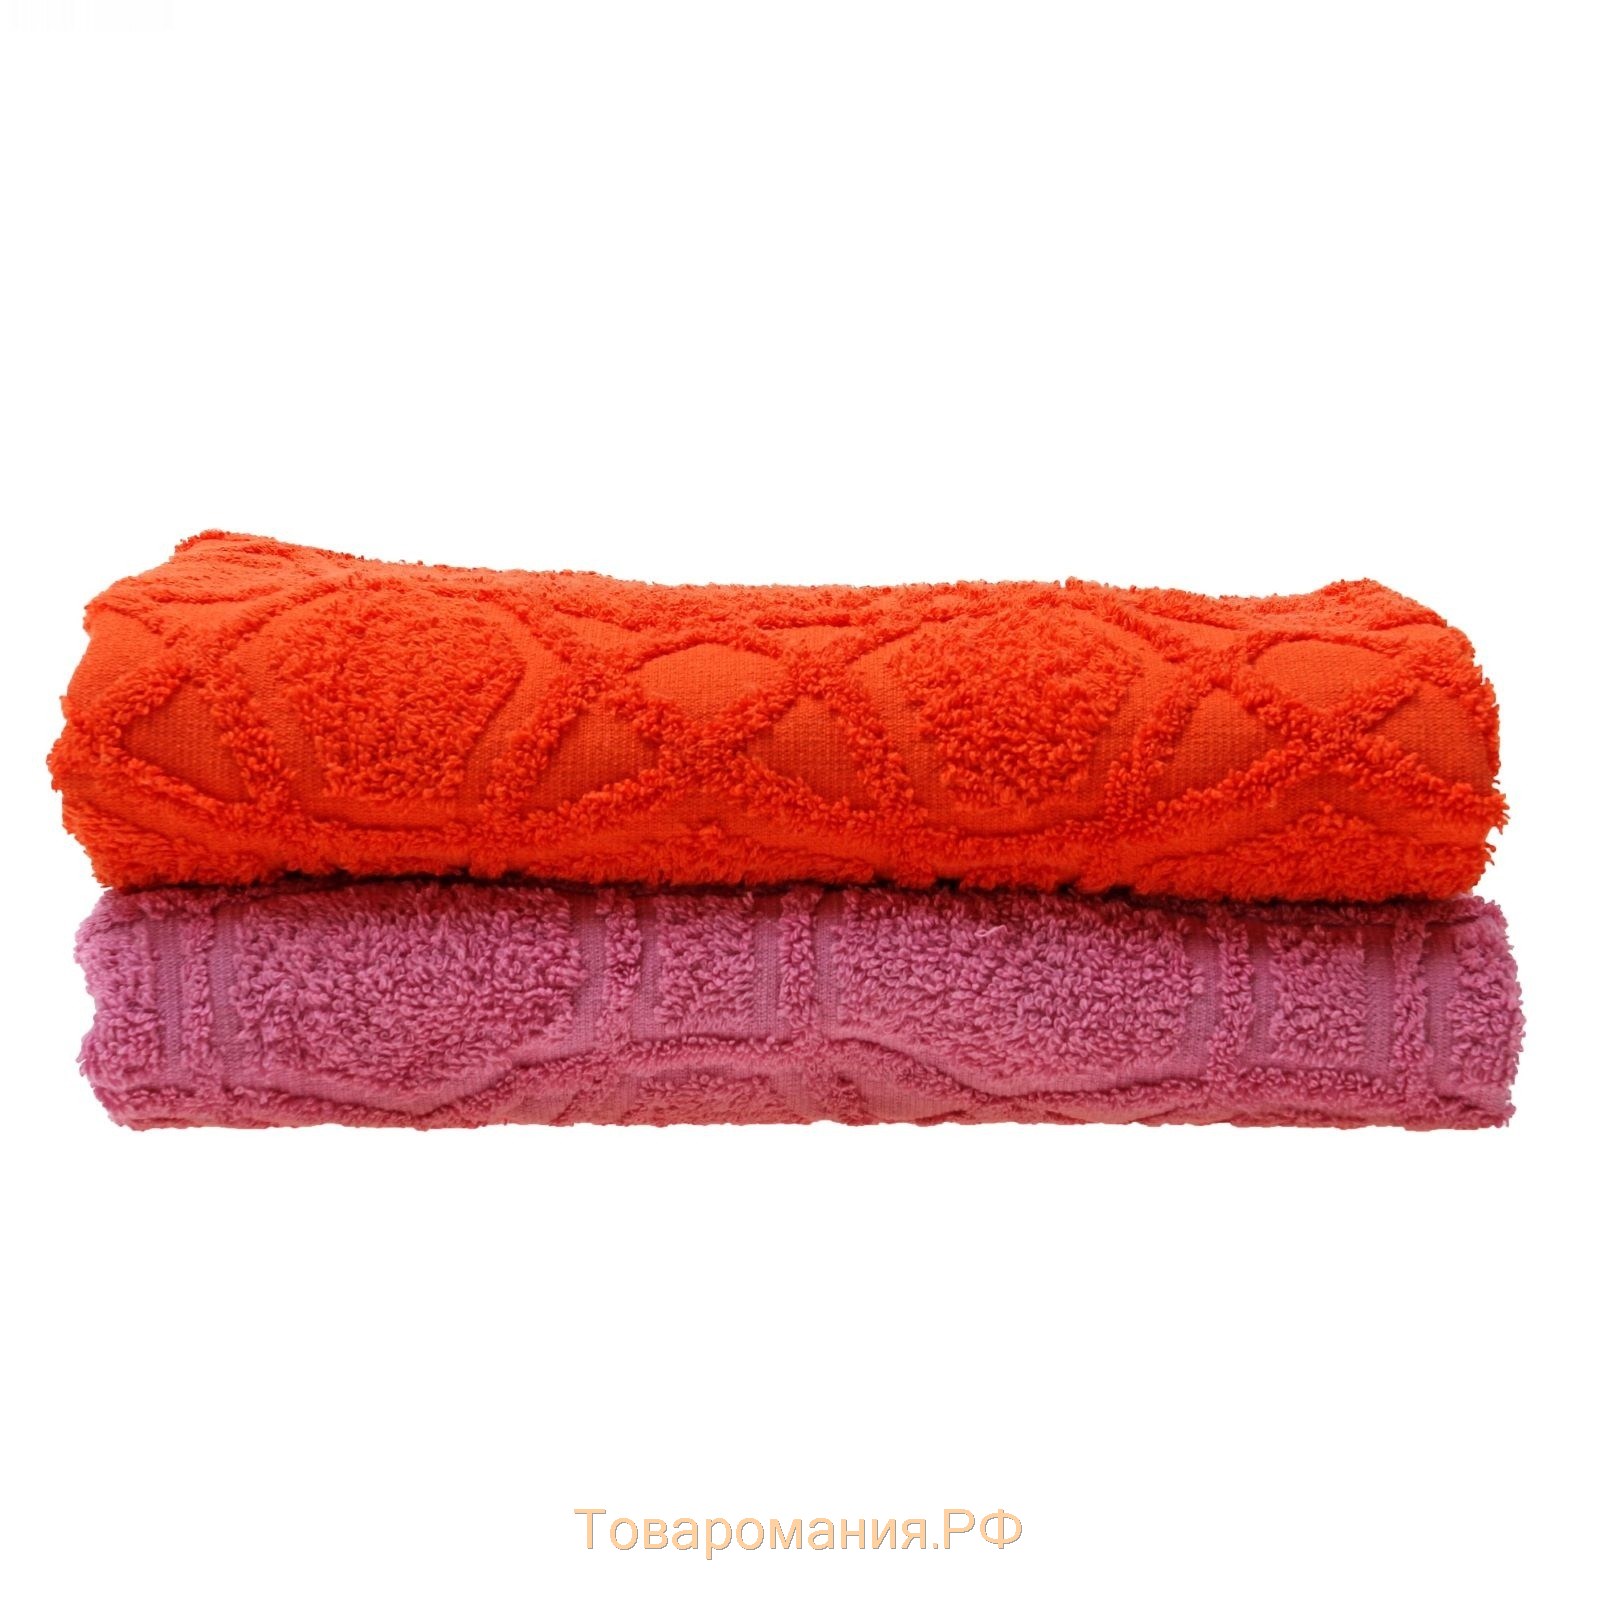 Полотенце махровое, размер 50х100 см, 380 гр/м2, цвет морковный